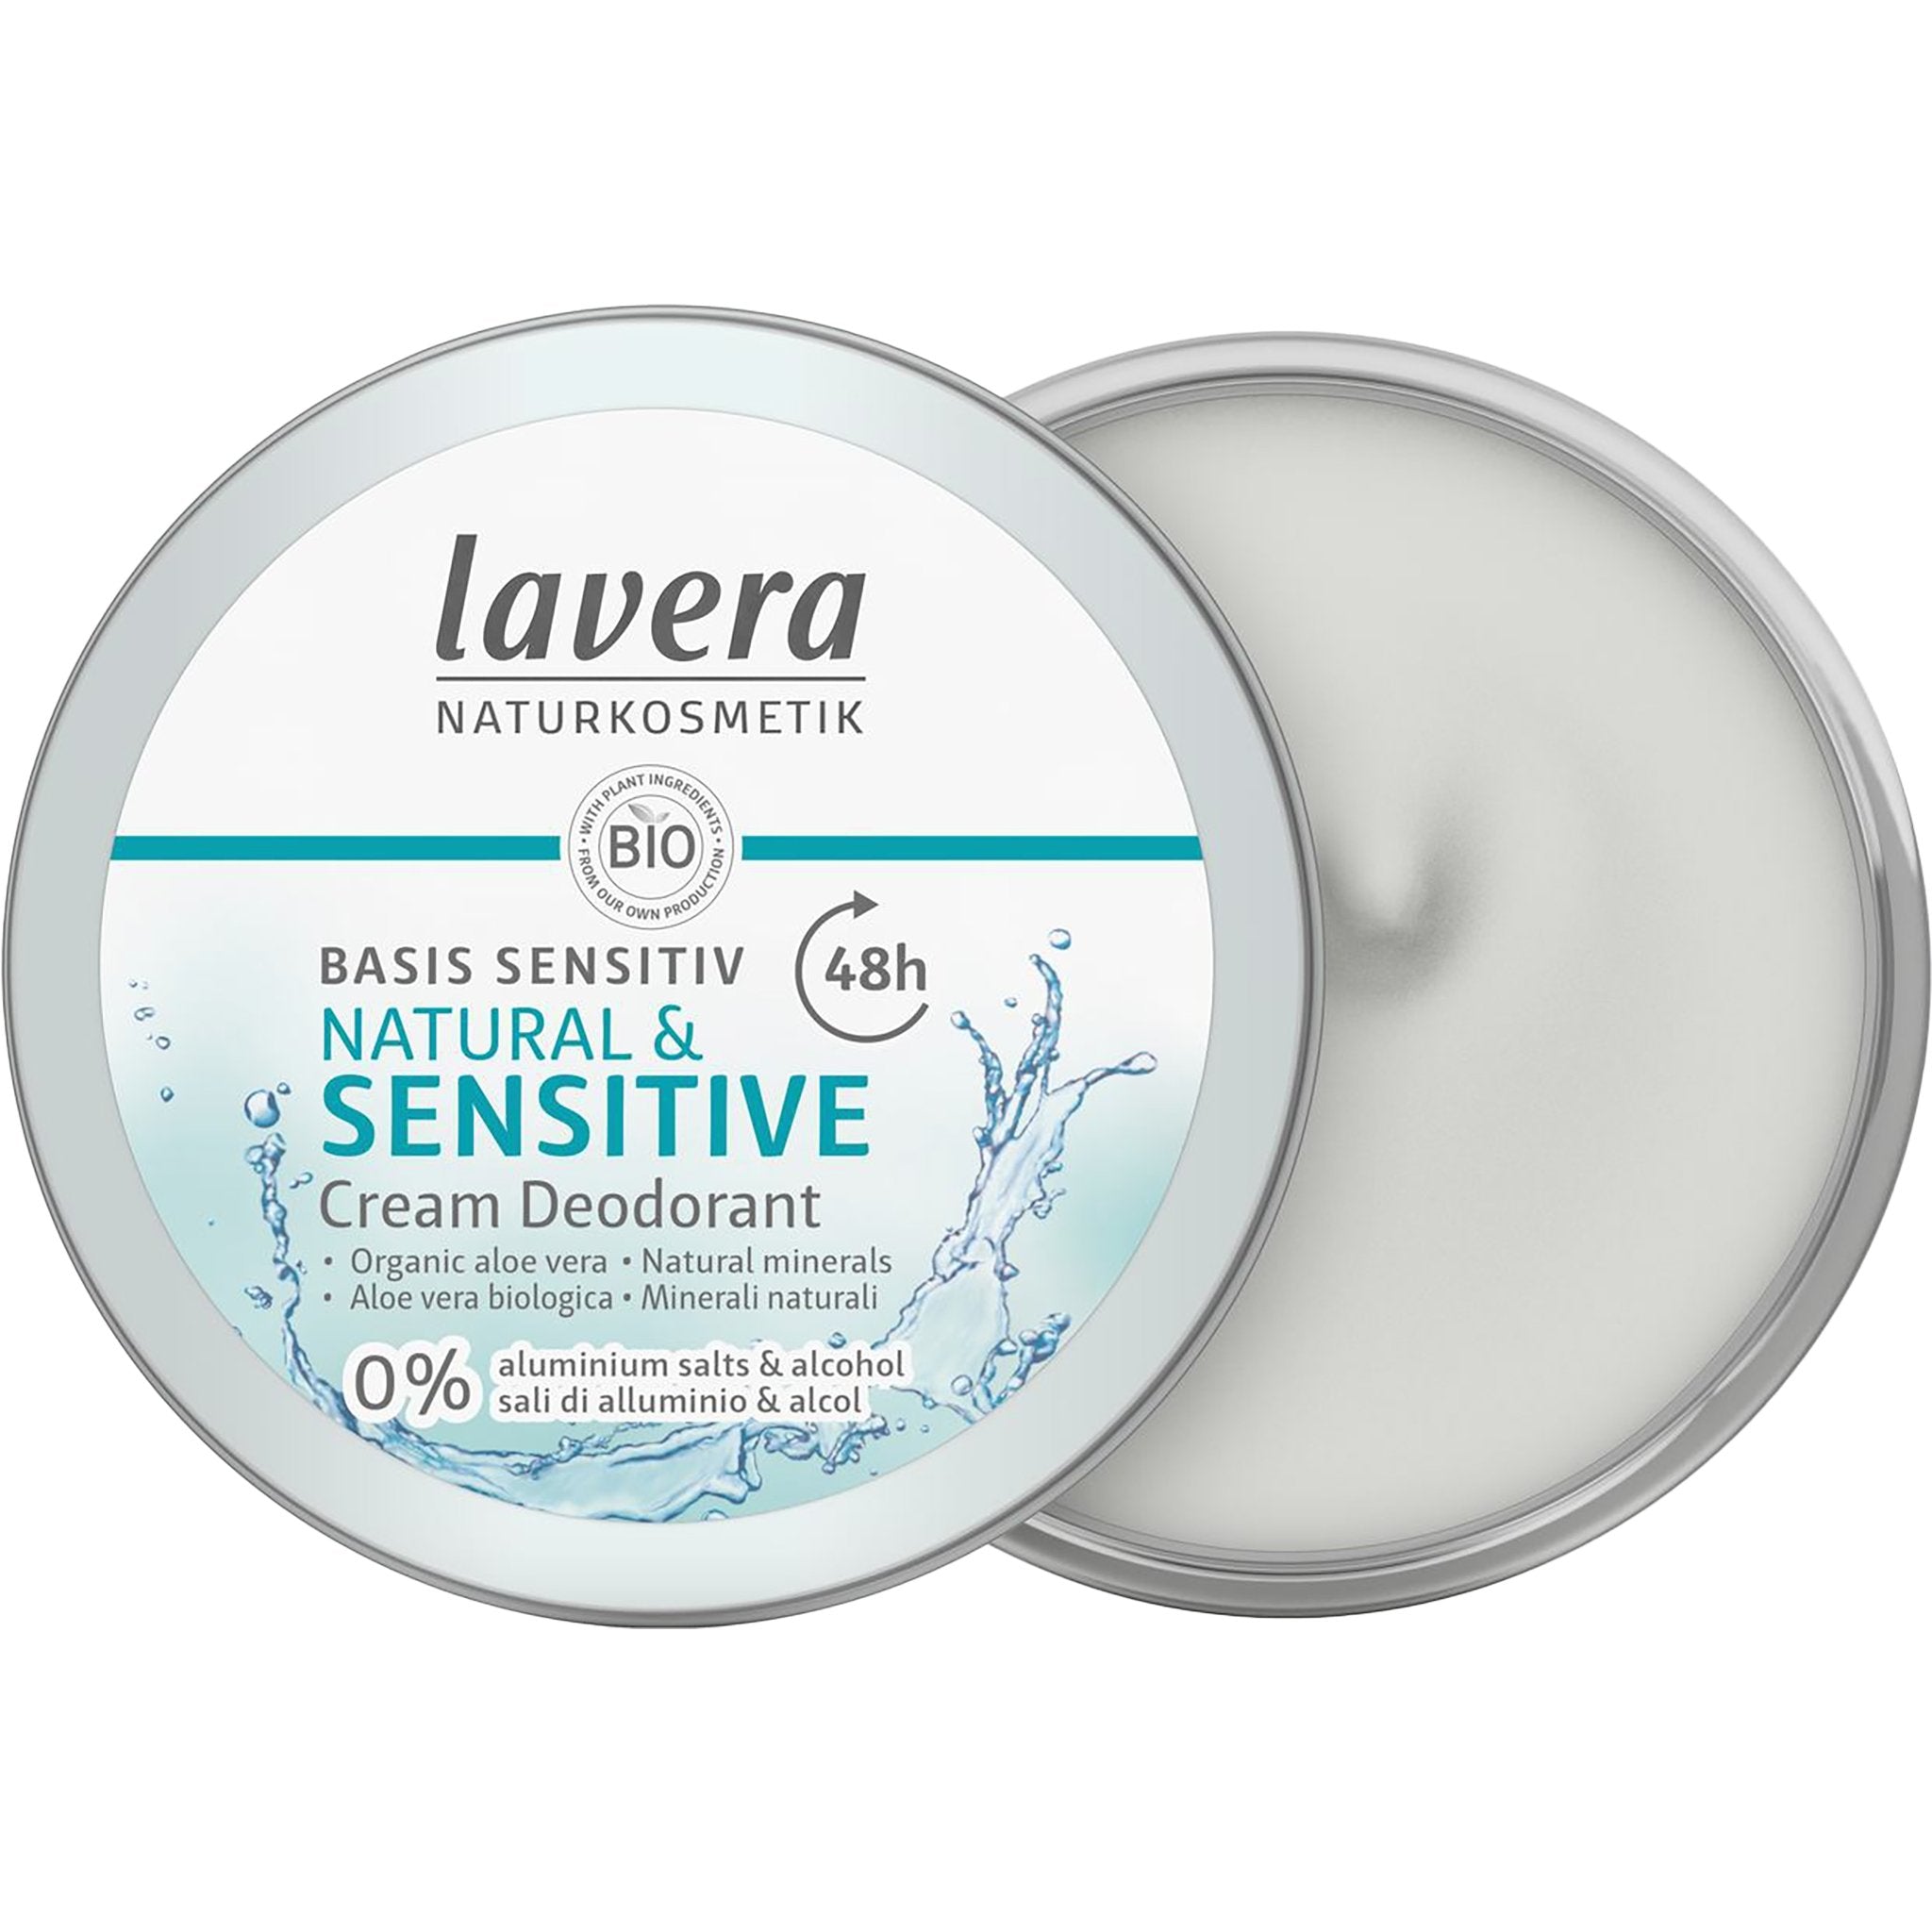 NEW Basis Sensitiv Cream Deodorant - mypure.co.uk